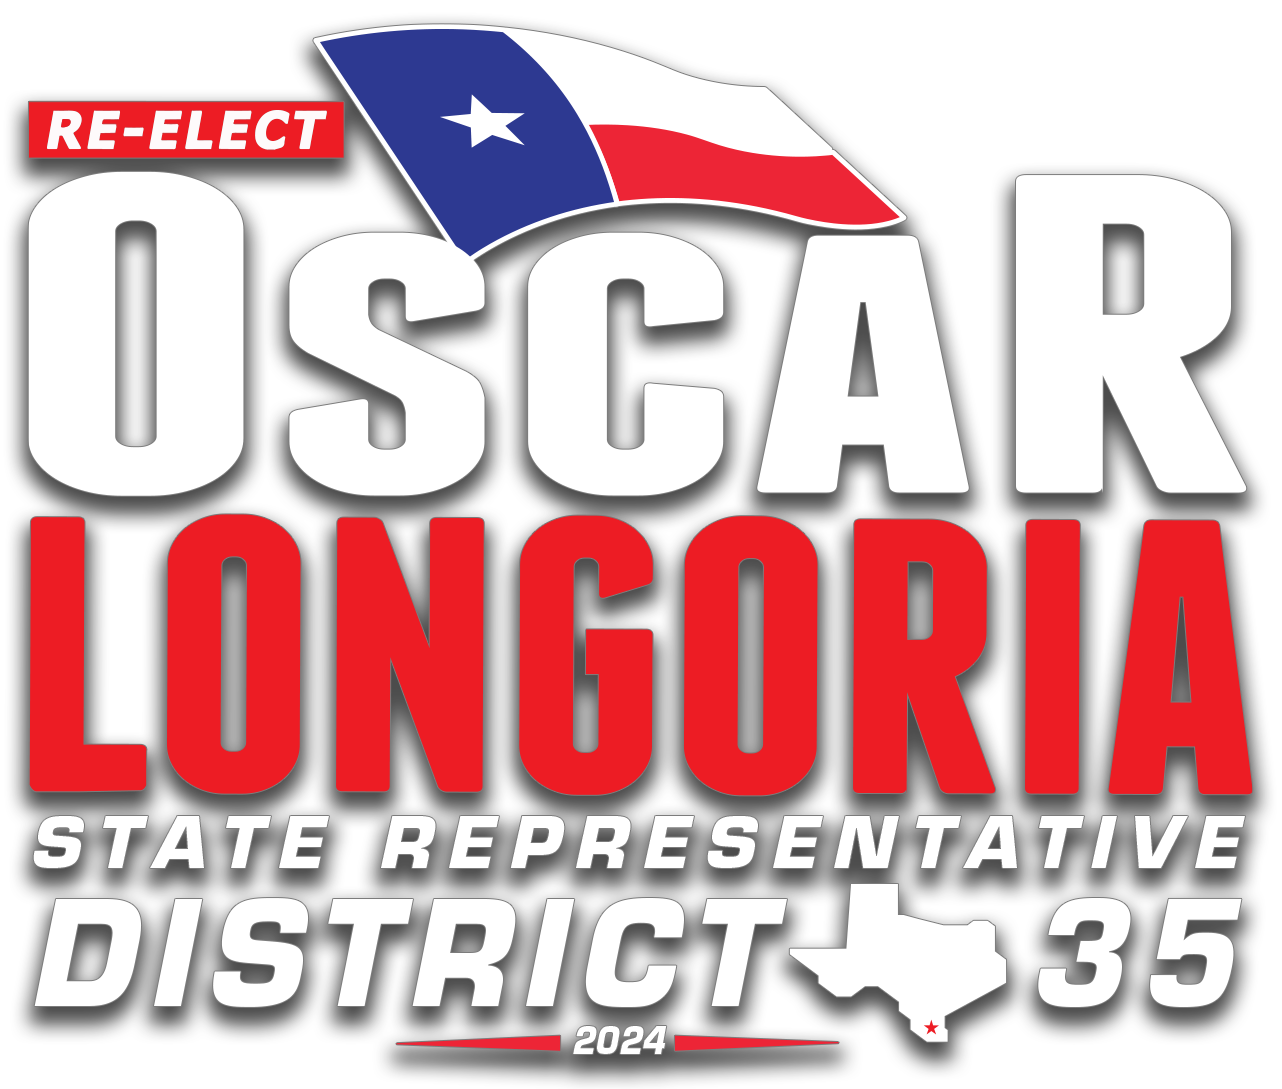 Oscar Longoria State Representative